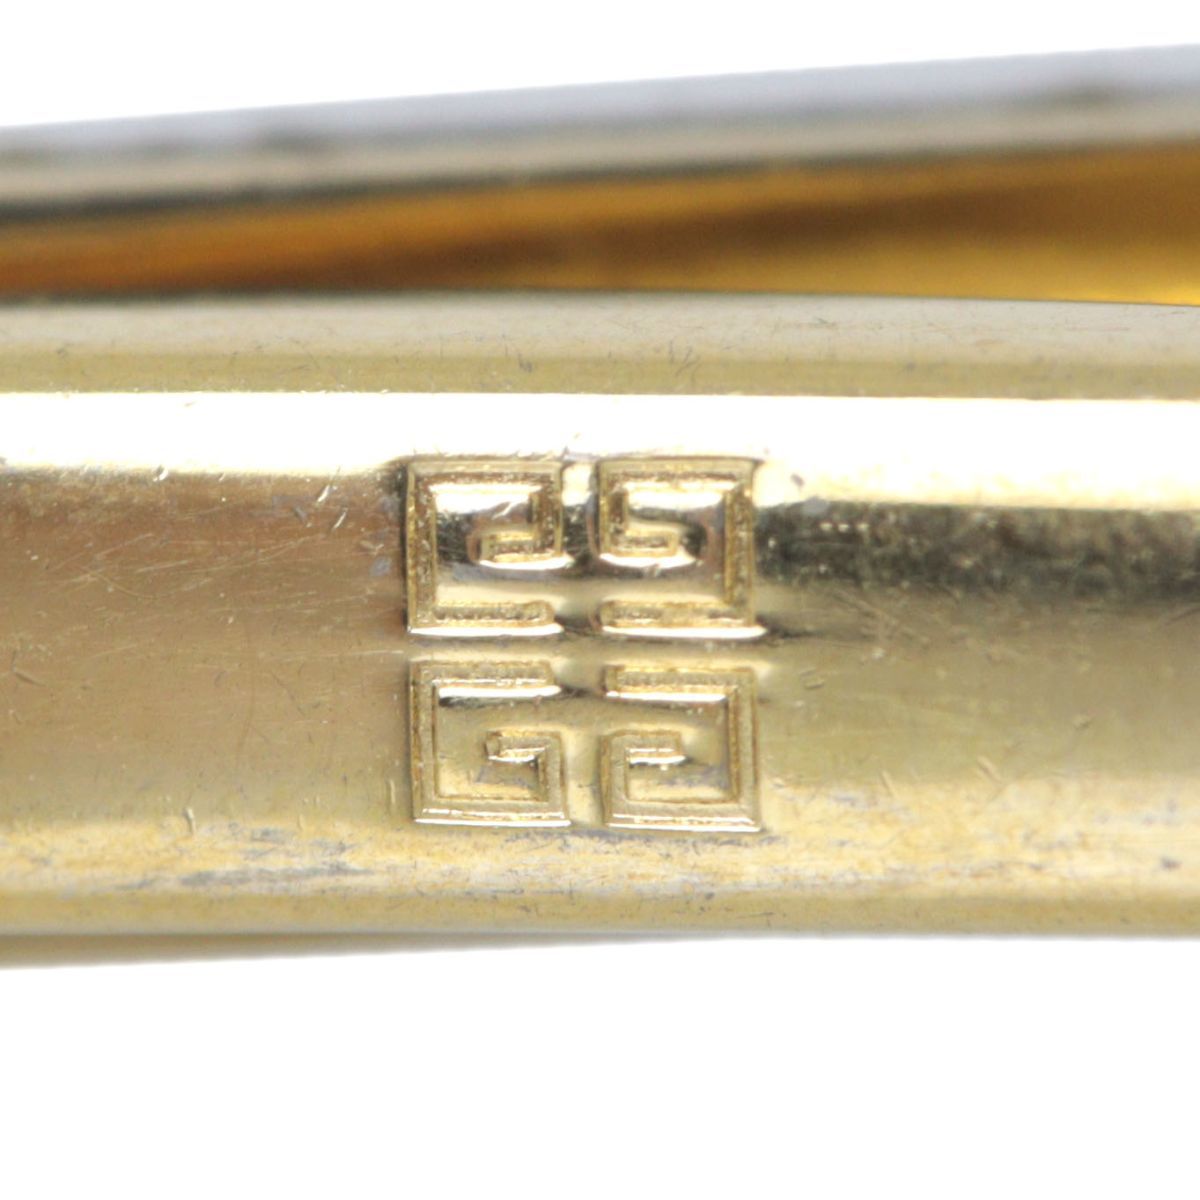 GIVENCHYji van si. дизайн логотипа булавка для галстука Gold × серебряный × черный 50×5(mm) NT B разряд 